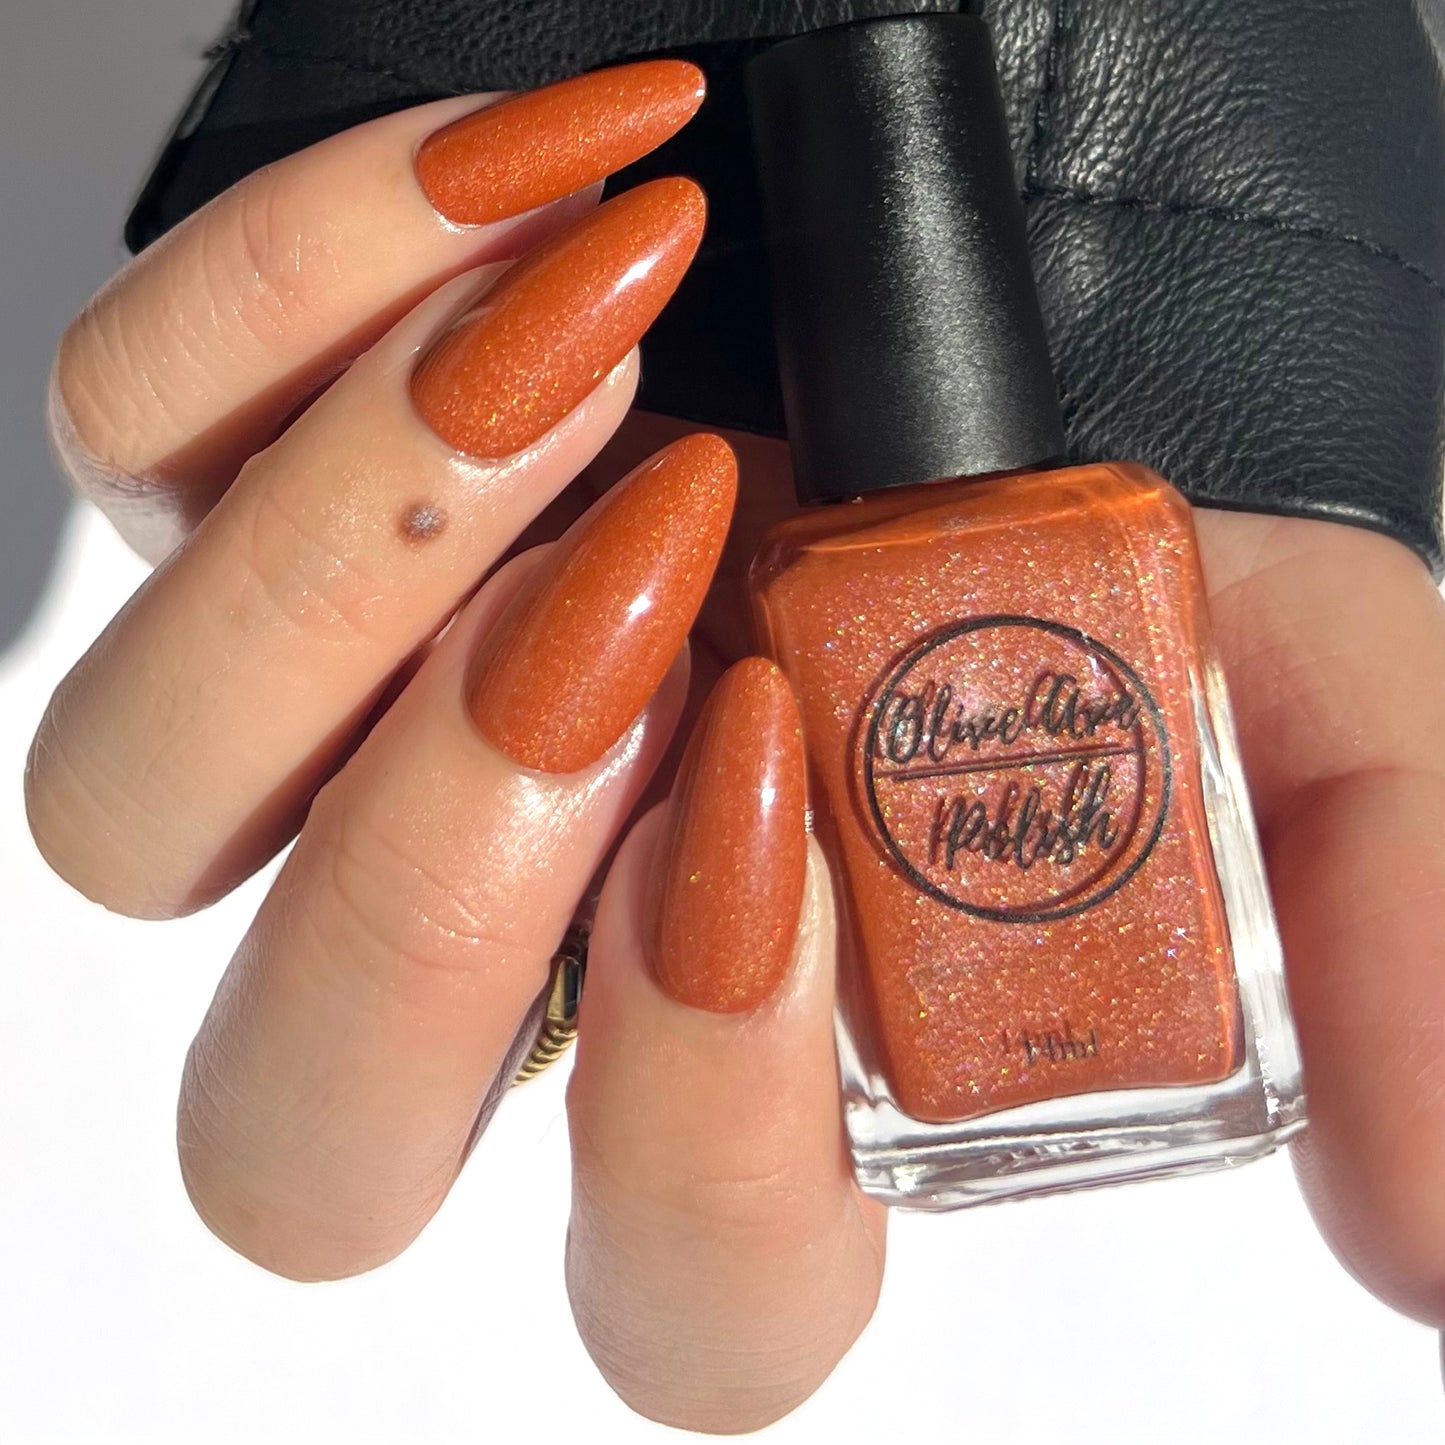 orange holographic nail polish on asian skin tone